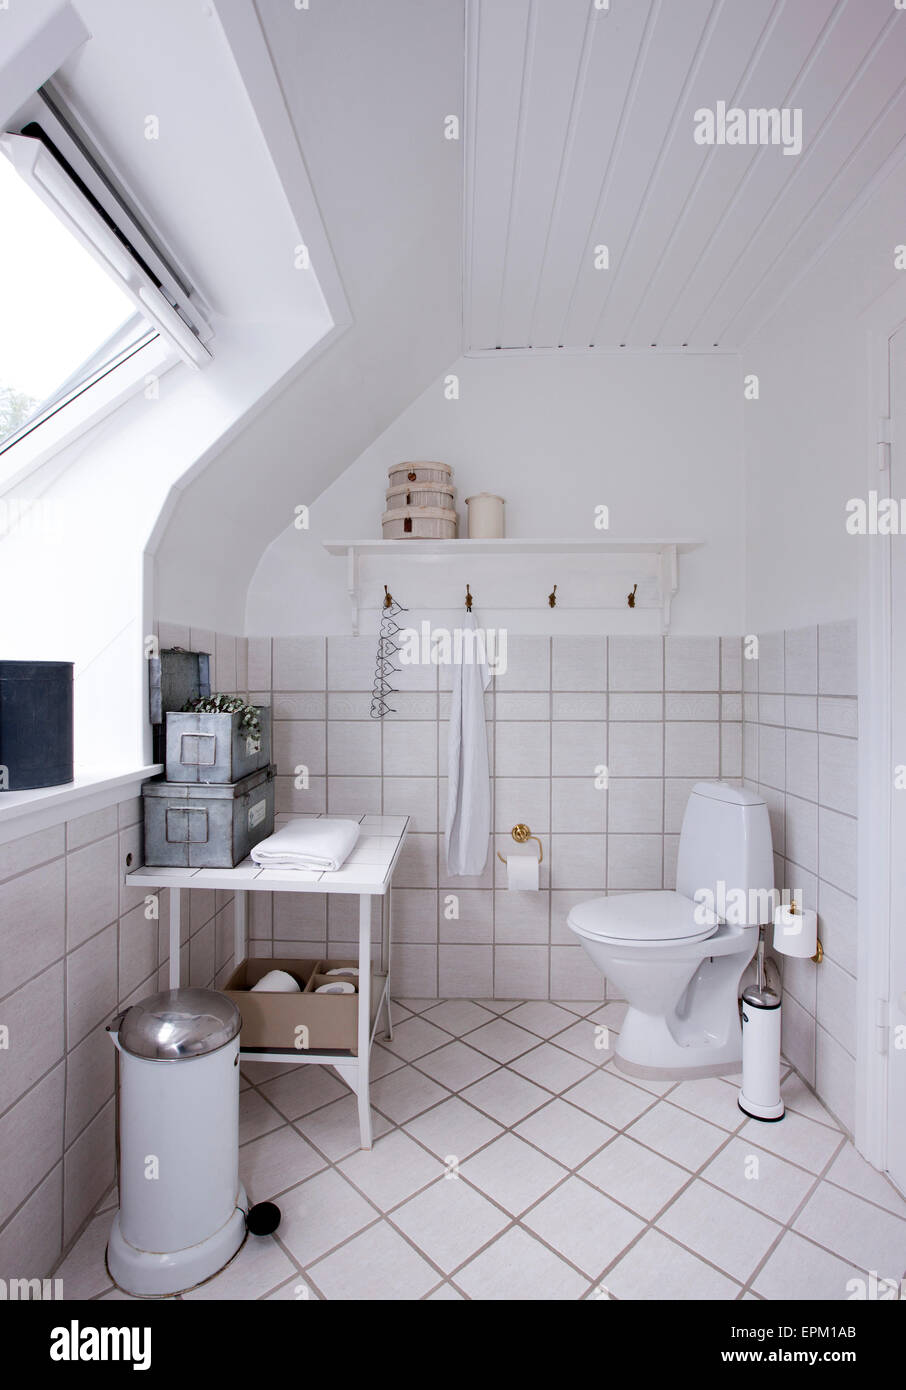 Tiled bathroom with dormer window in Hanne Davidsen home renovation, Silkesborg, Denmark. Stock Photo